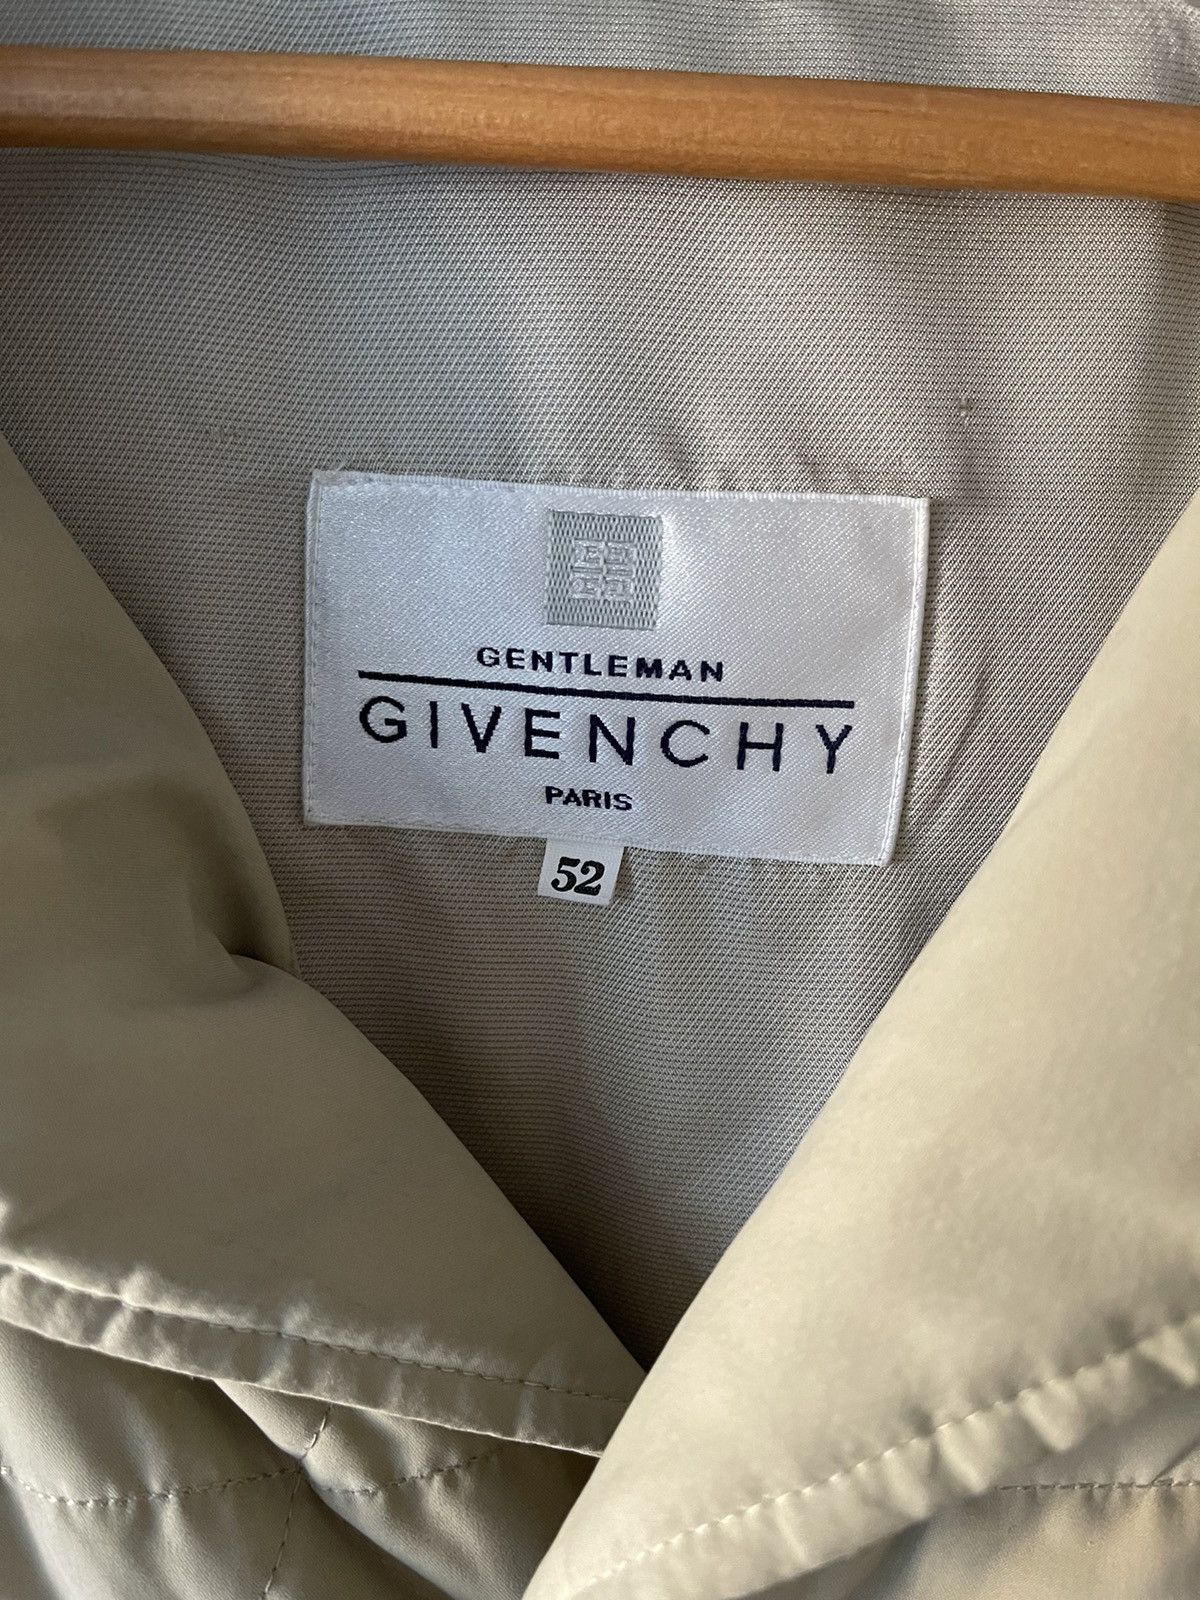 Givenchy Givenchy Gentleman Paris quilted coat Size US L / EU 52-54 / 3 - 3 Thumbnail